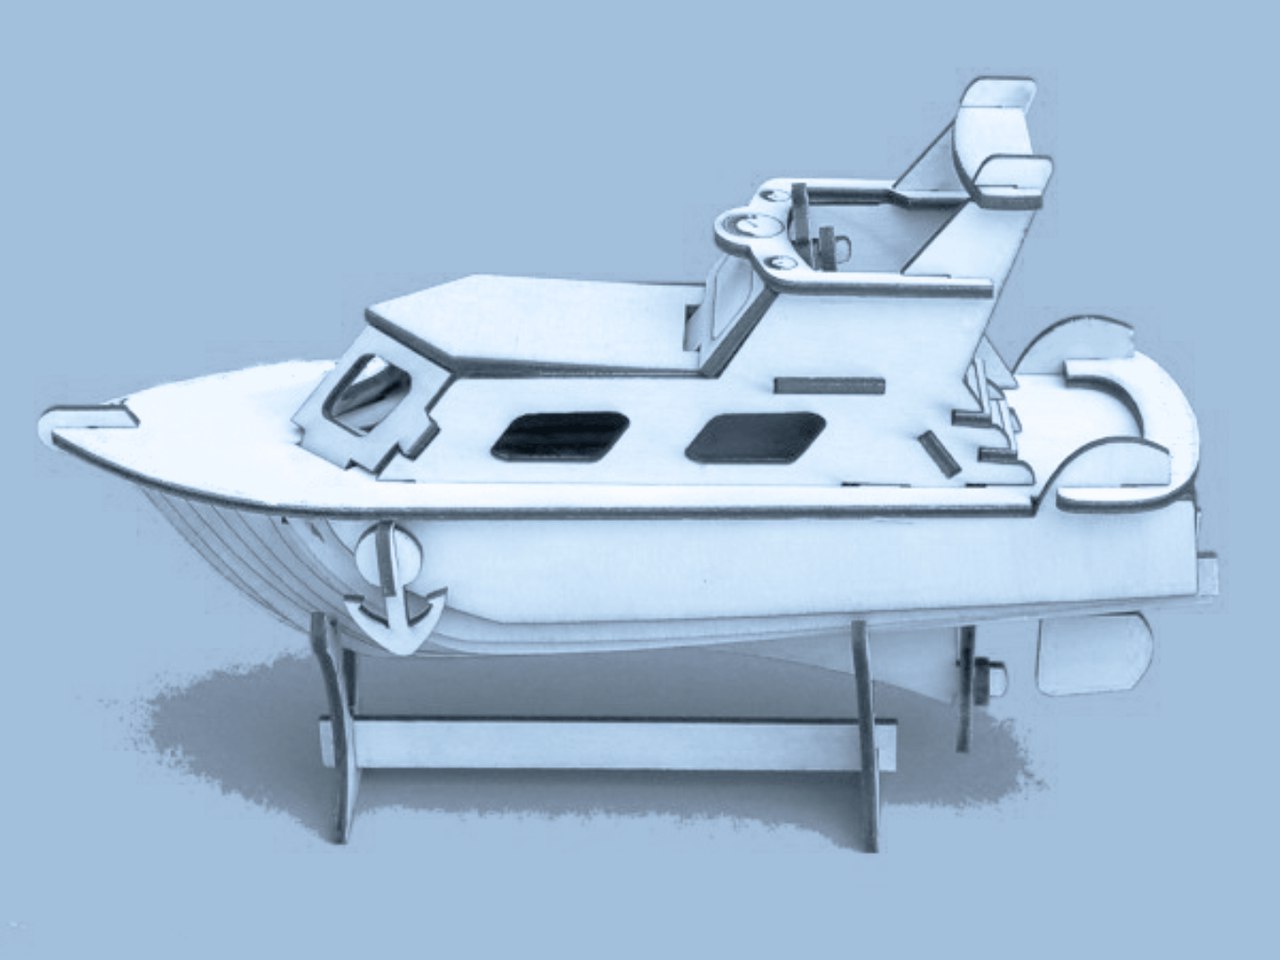 Yacht Laser Cut Puzzle Model Free CDR Vectors File